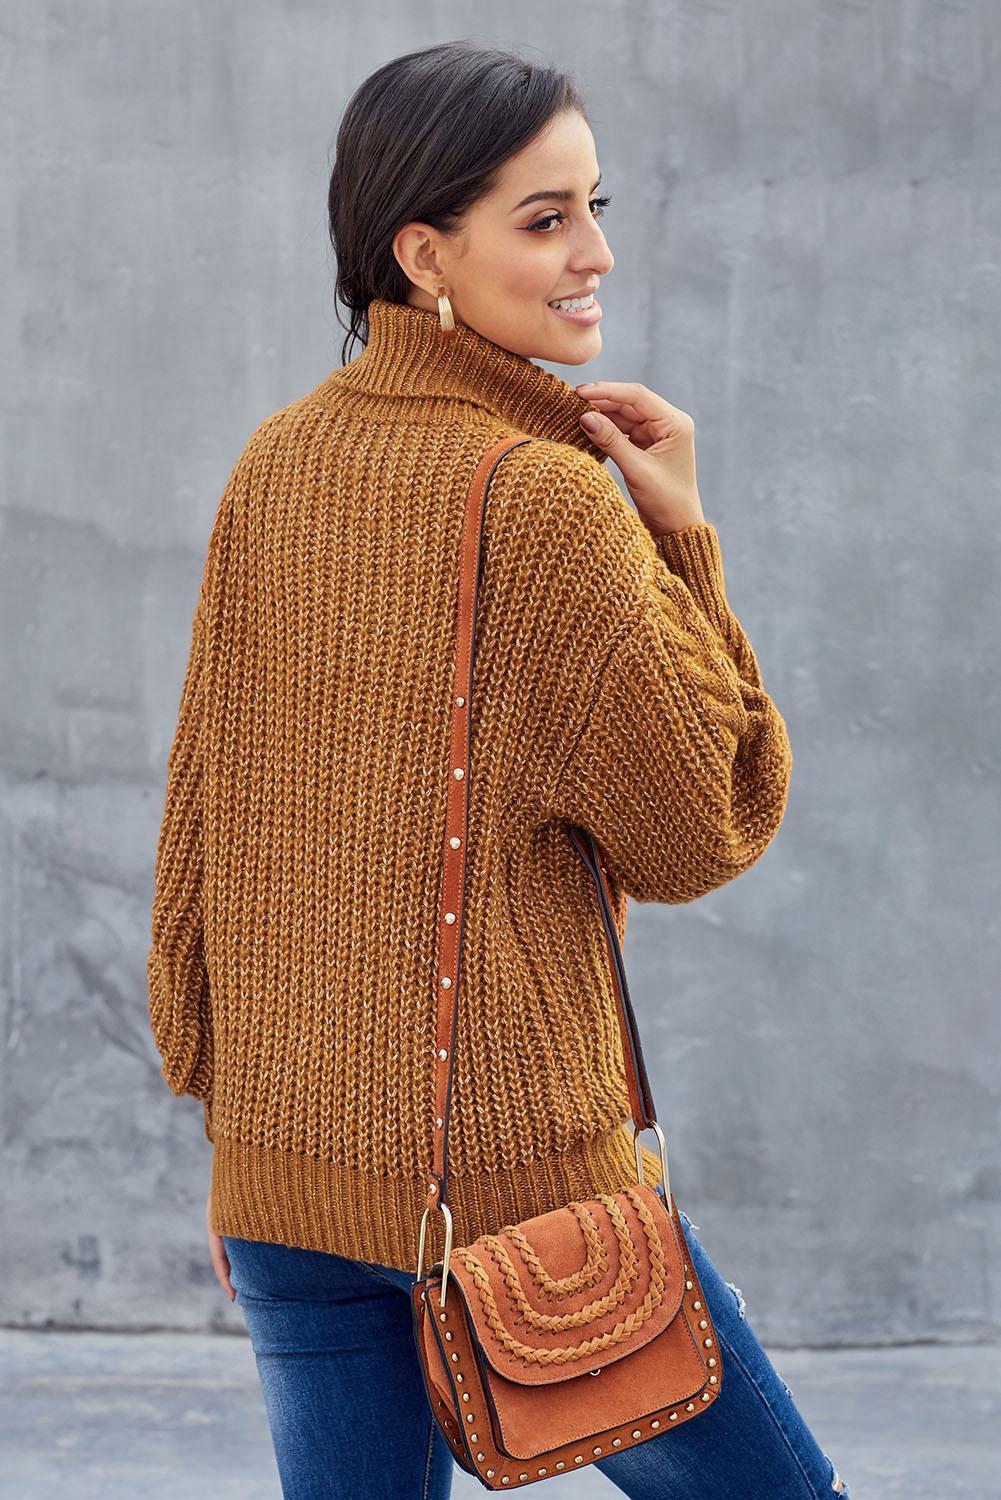 New Turtleneck Sweater